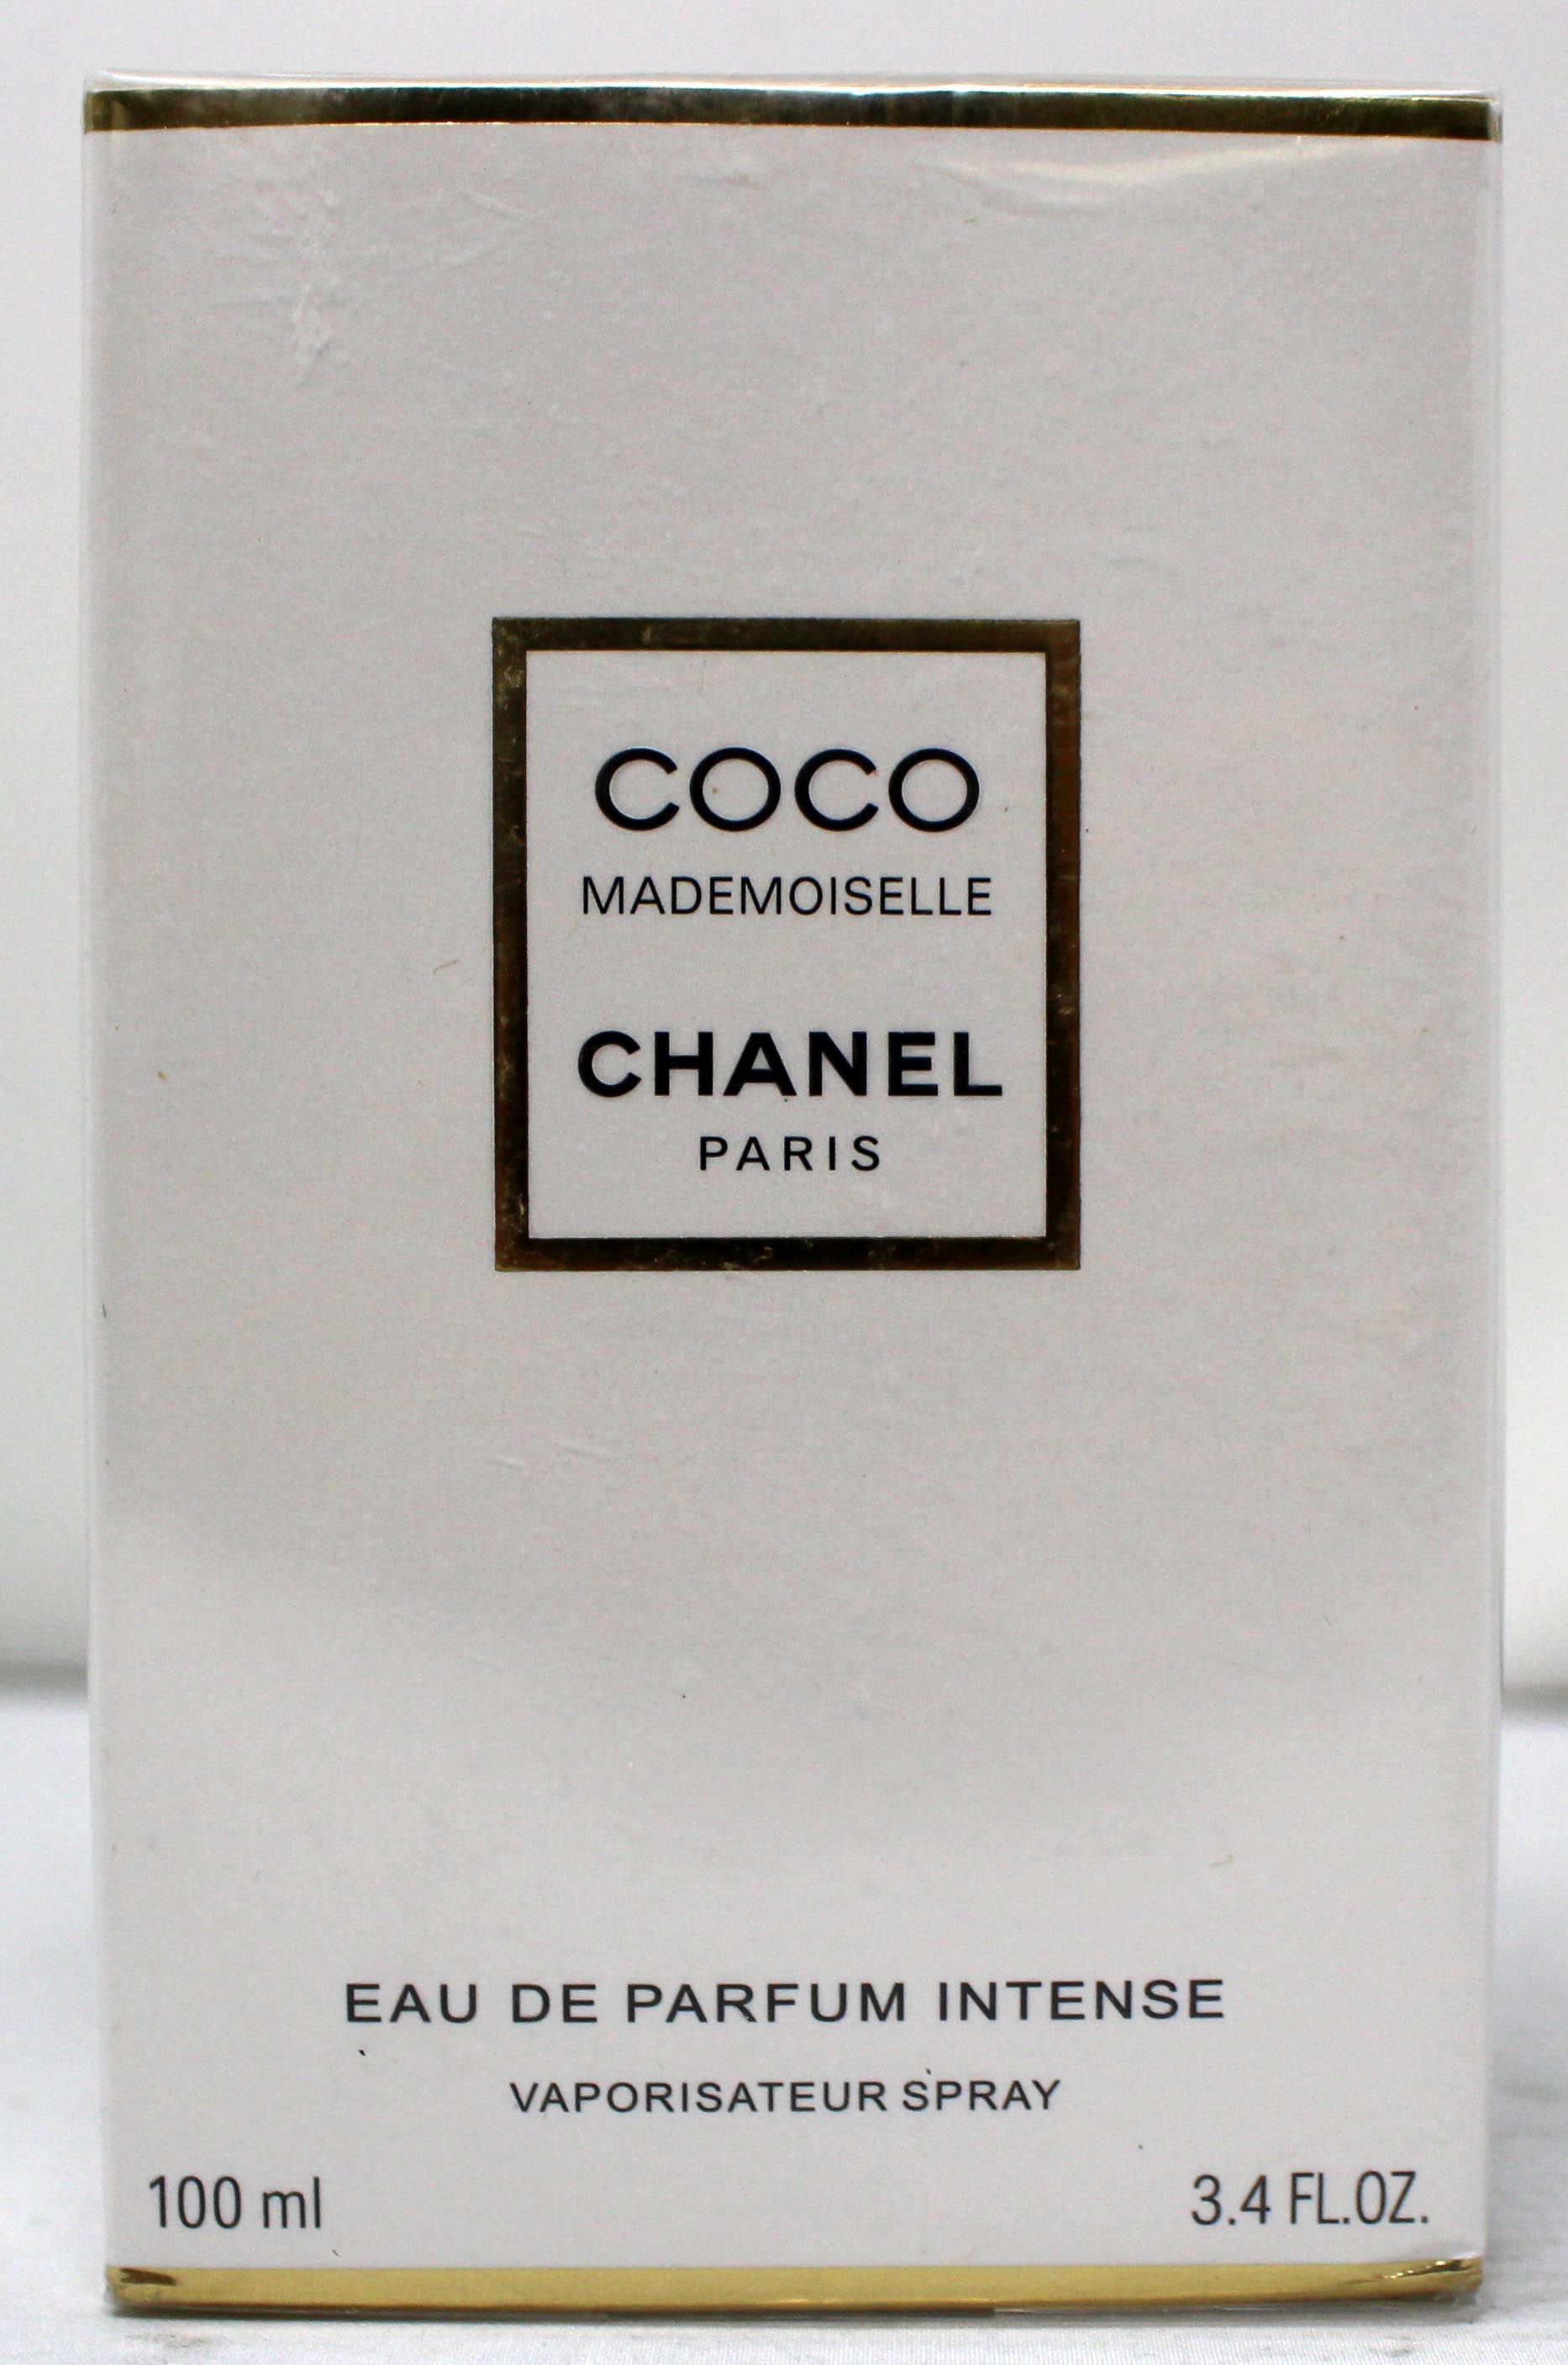 Chanel Coco Mademoiselle De Parfum Intense Spray, 3.4 oz. -